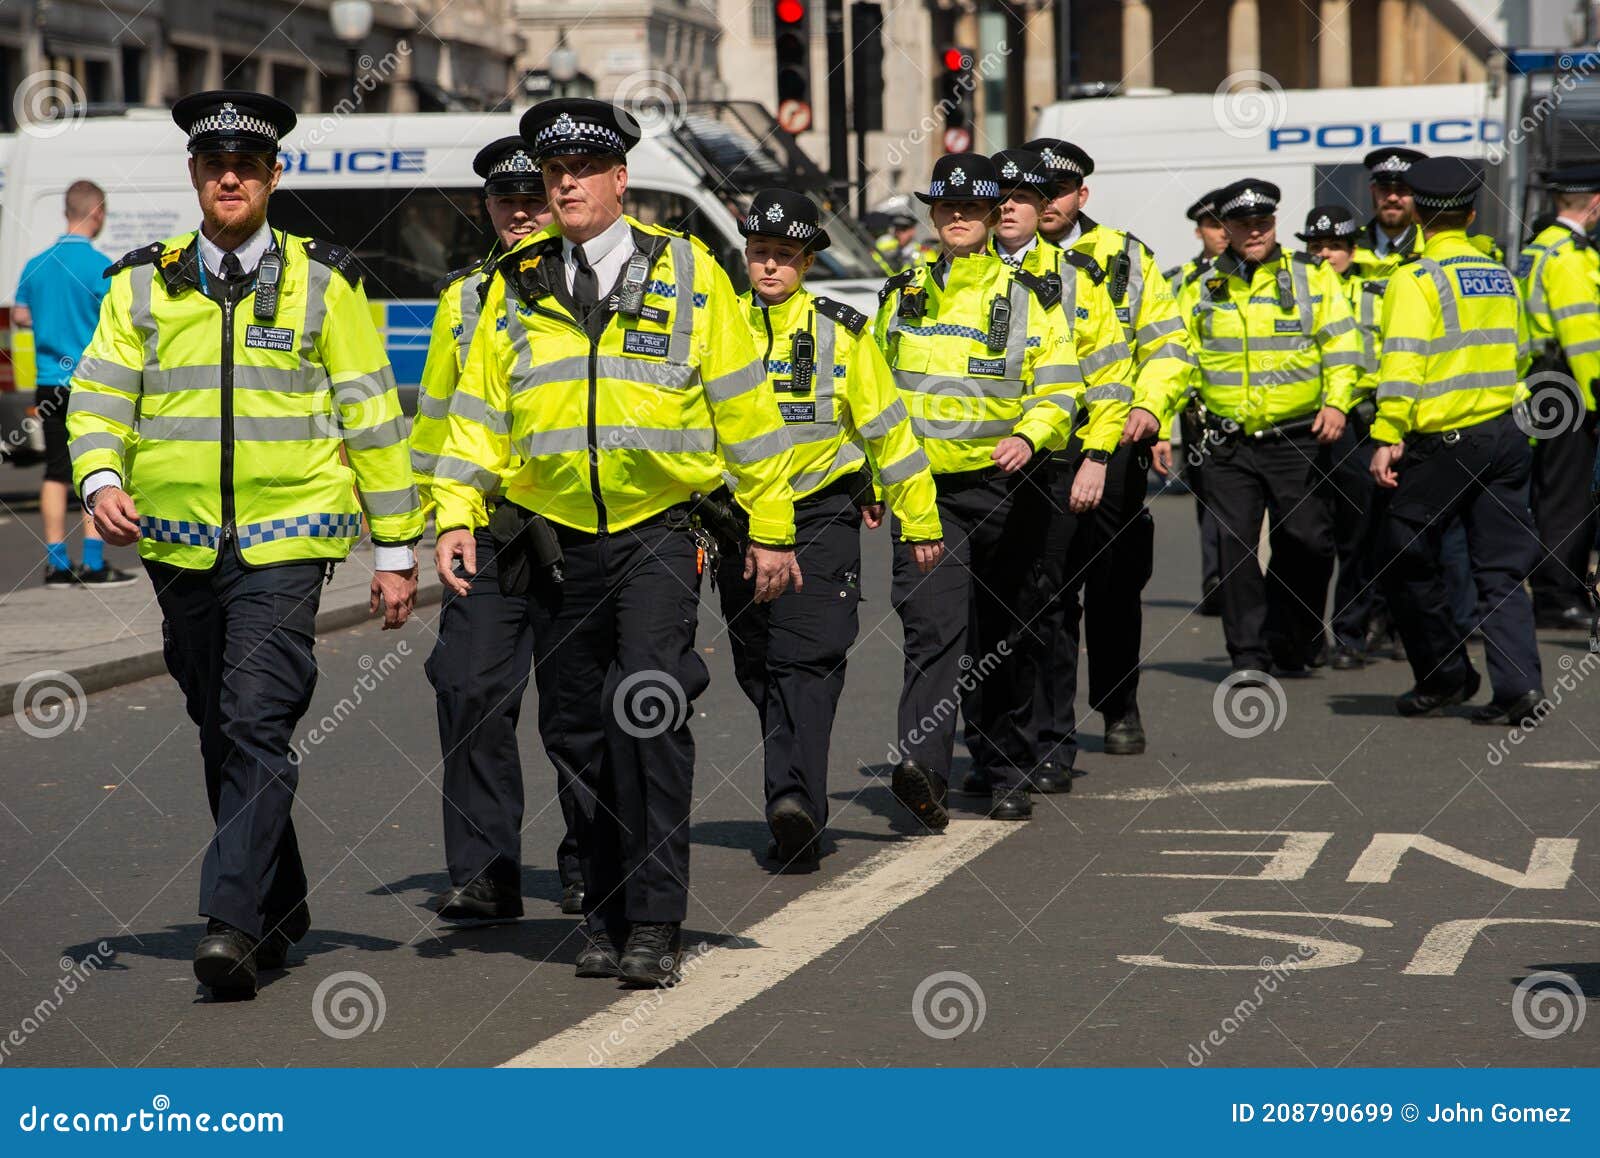 purple-awareness-ribbon-hi - London PoliceLondon Police